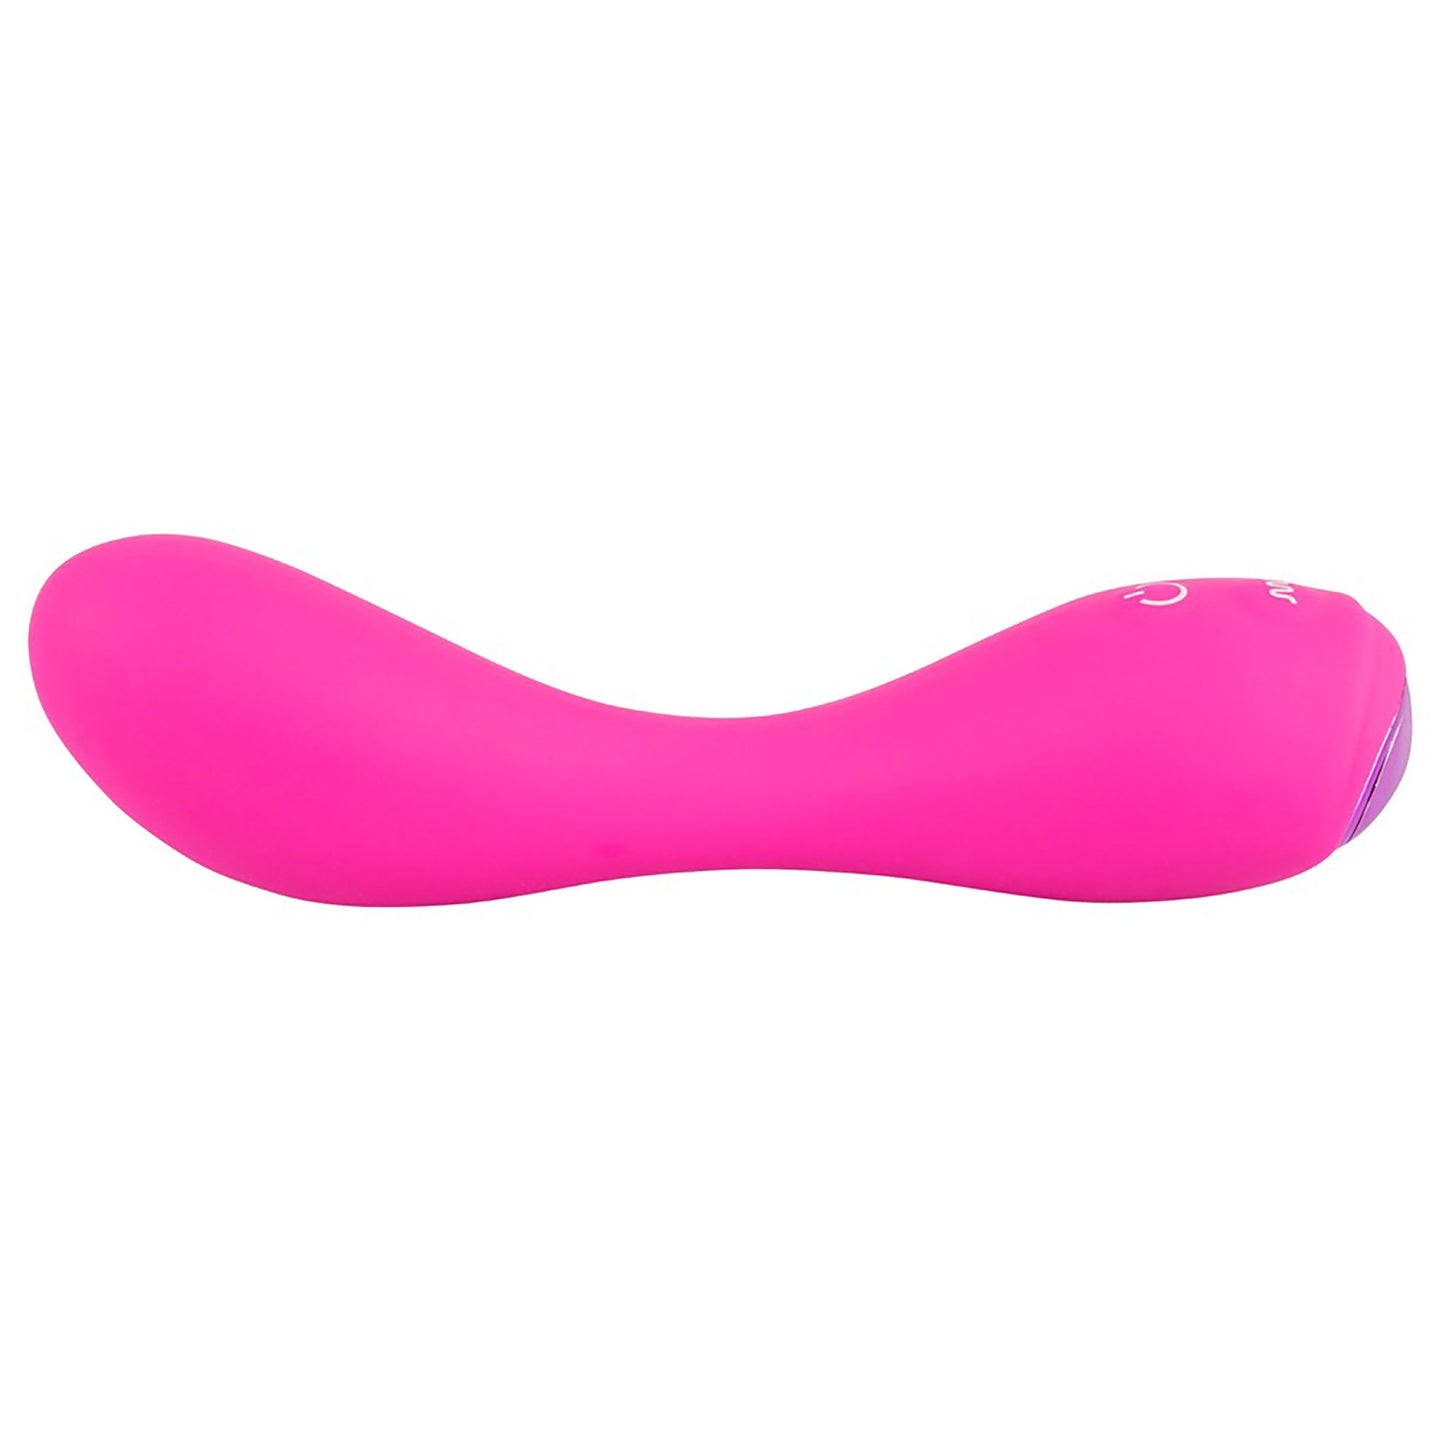 G-Spot Vibrator in pink von Sweet Smile, verpackung offen